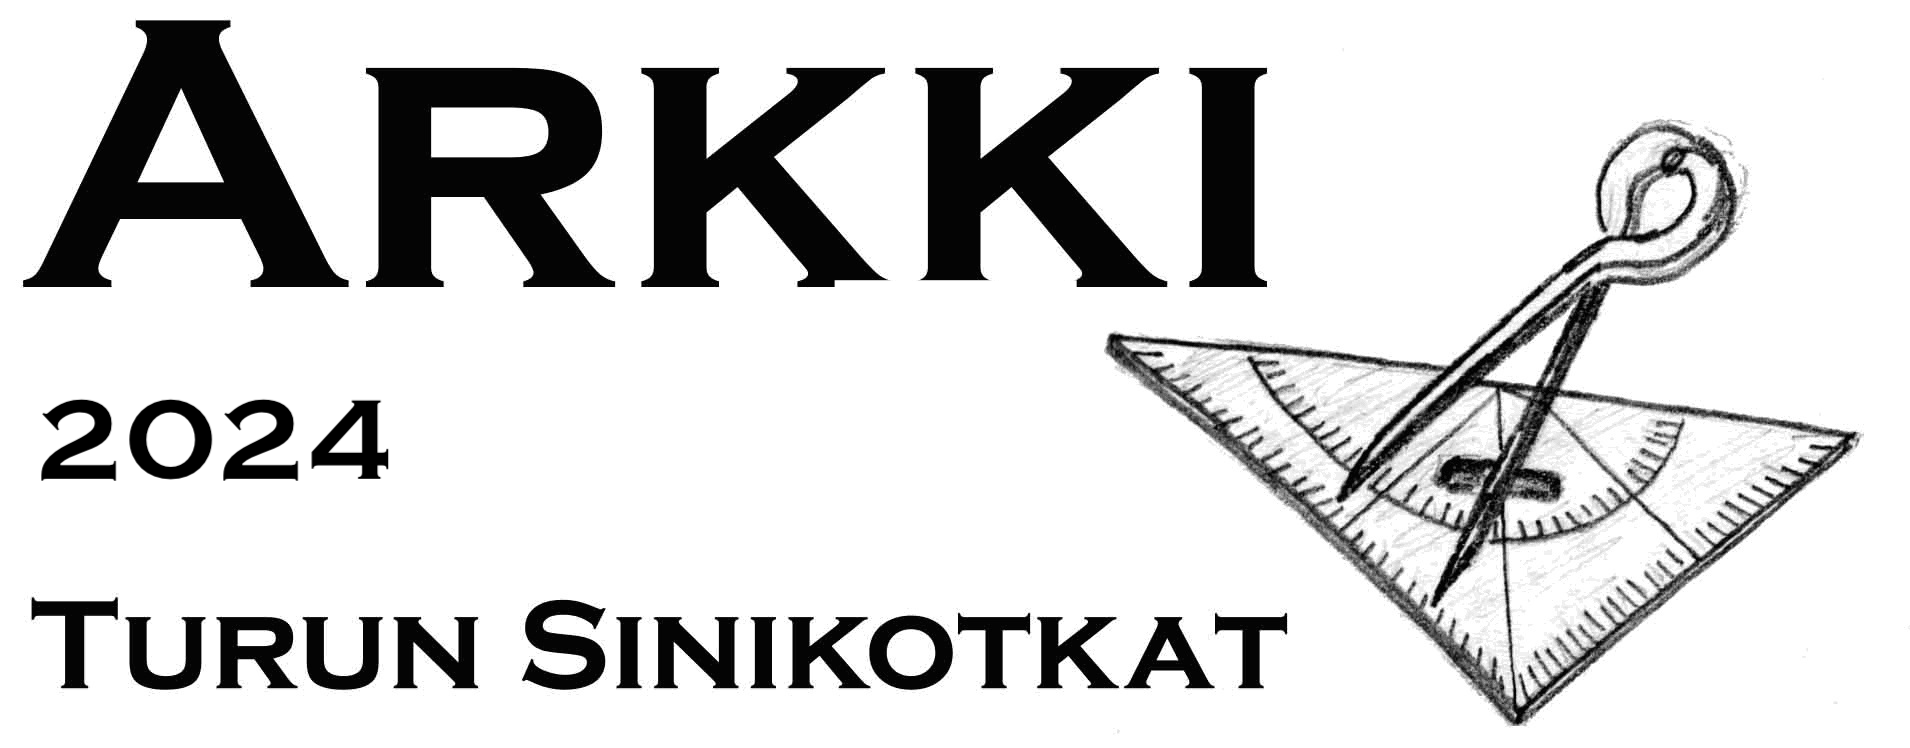 Arkki 2024